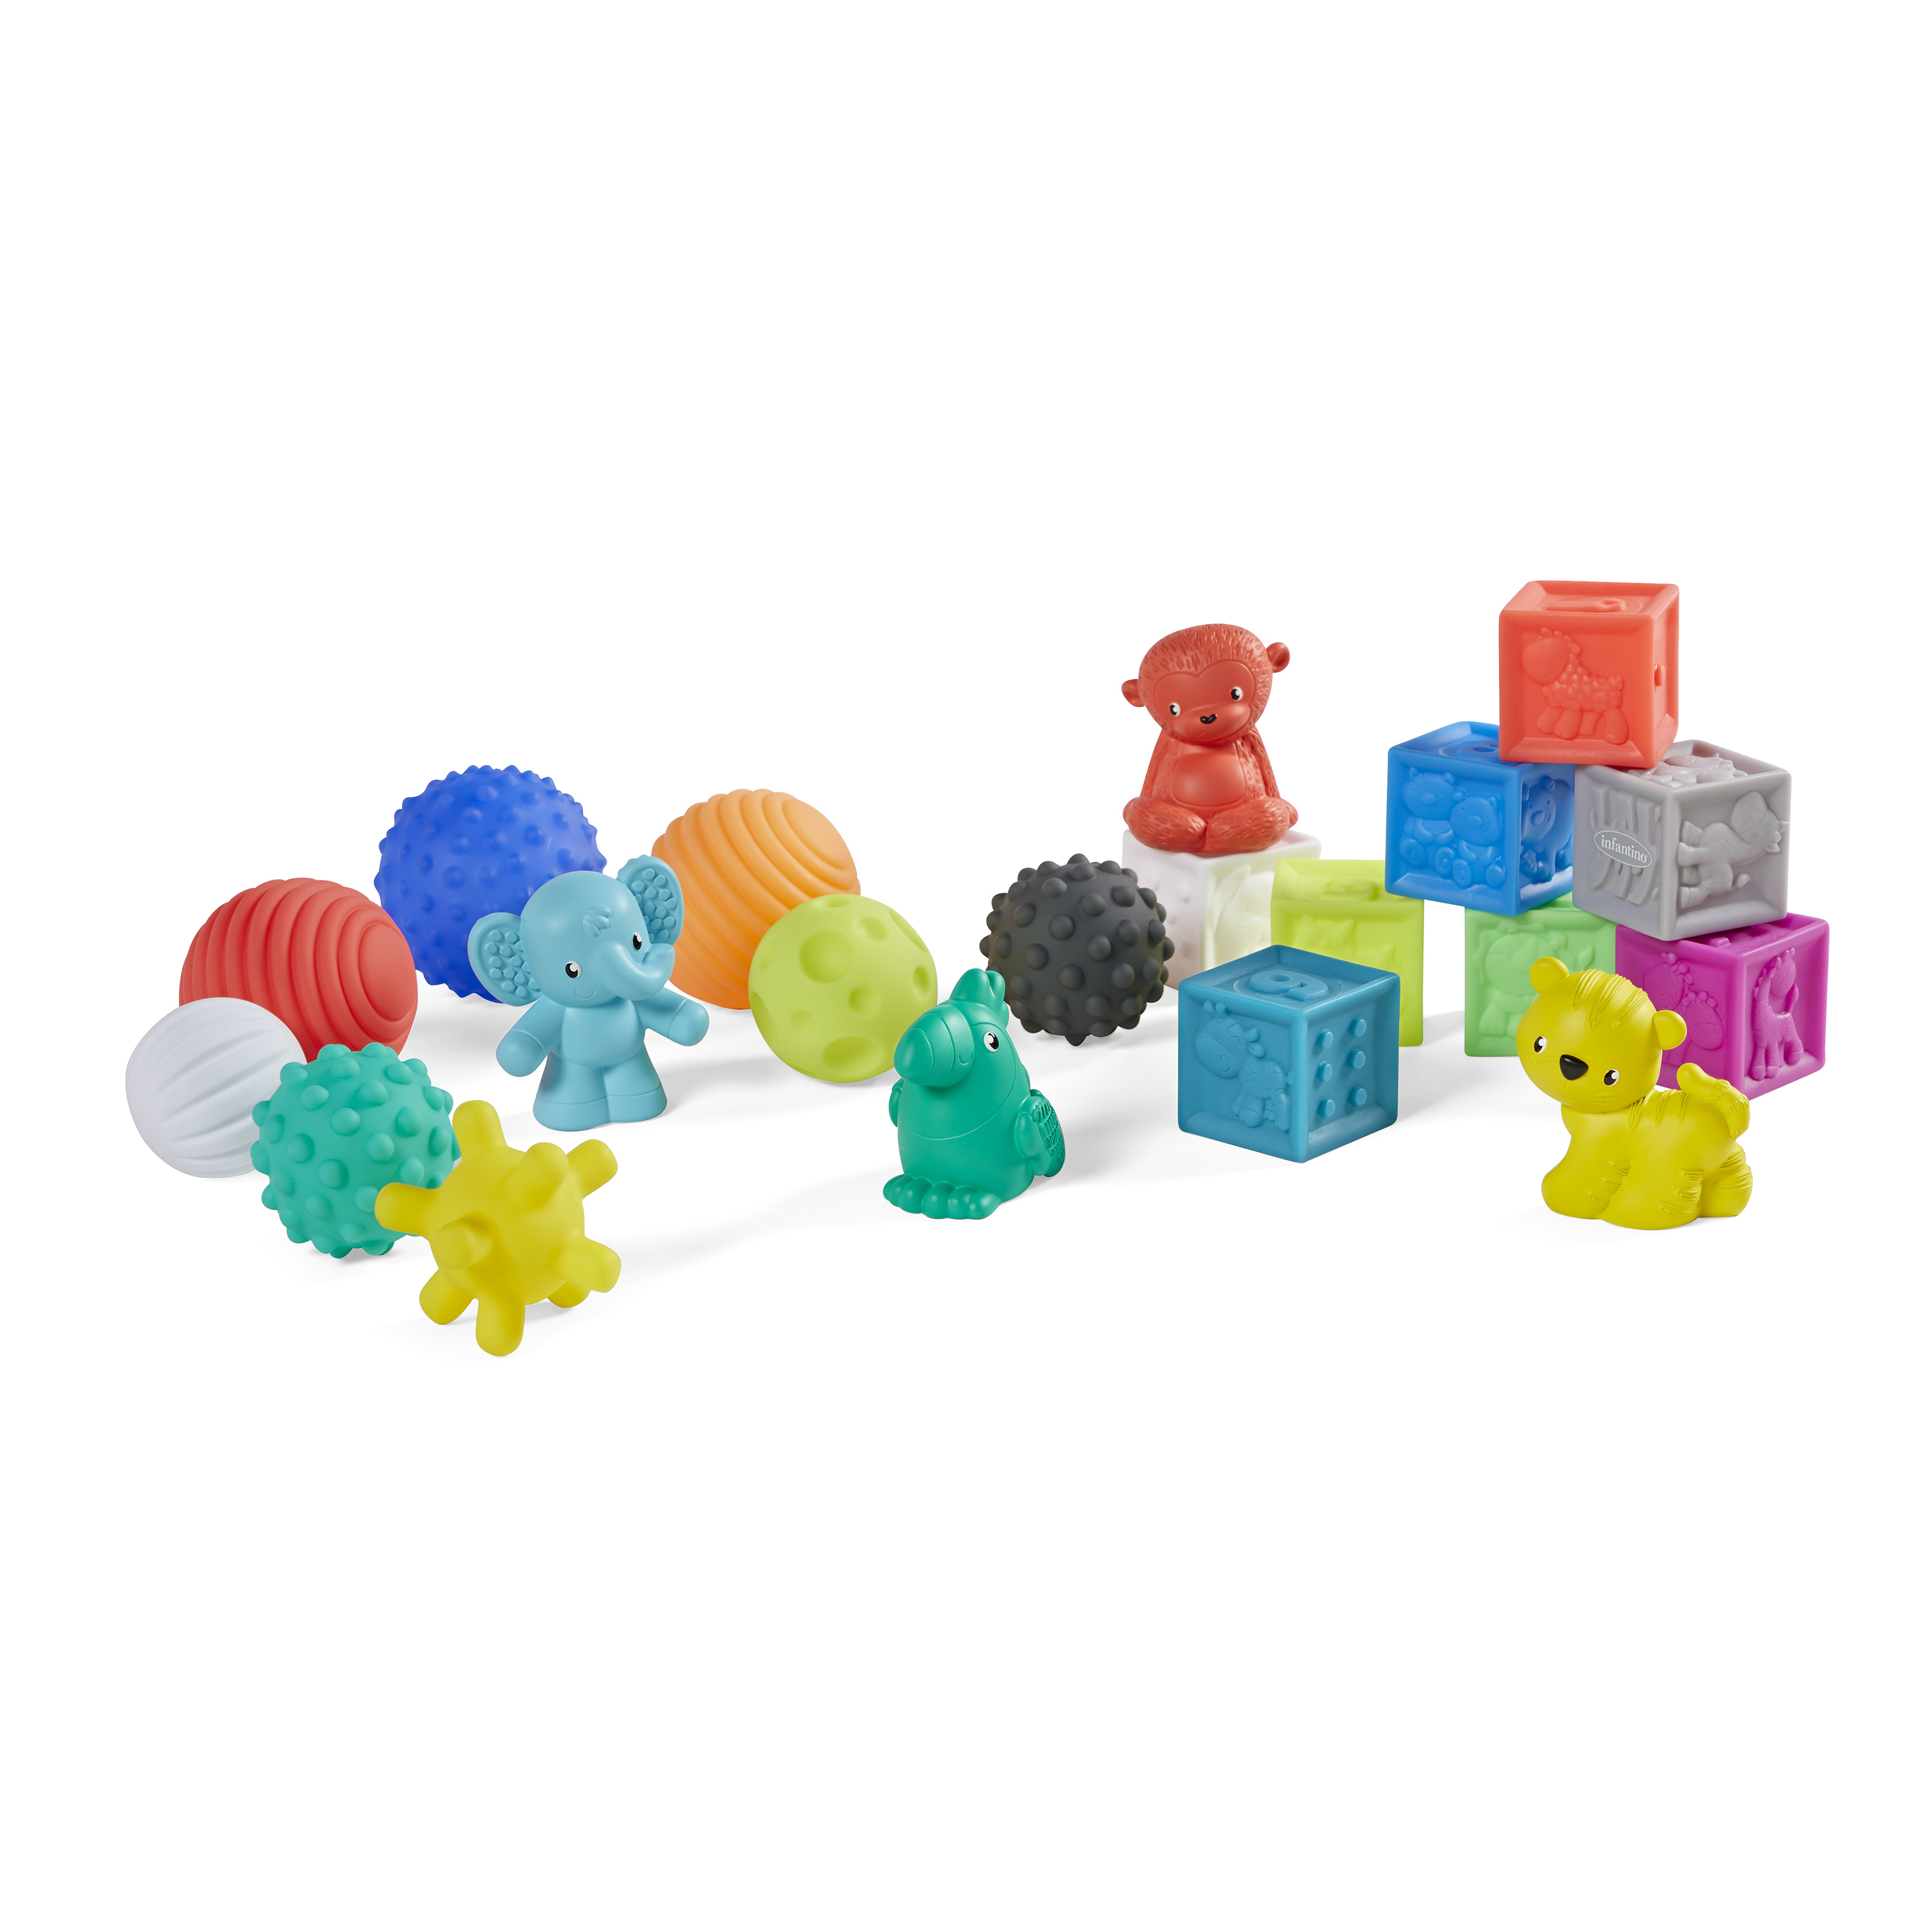 Infantino Sensory Soft Balls, Blocks & Animal Buddies, 6-12 Months, 20-Piece Set, Multicolor - image 5 of 8